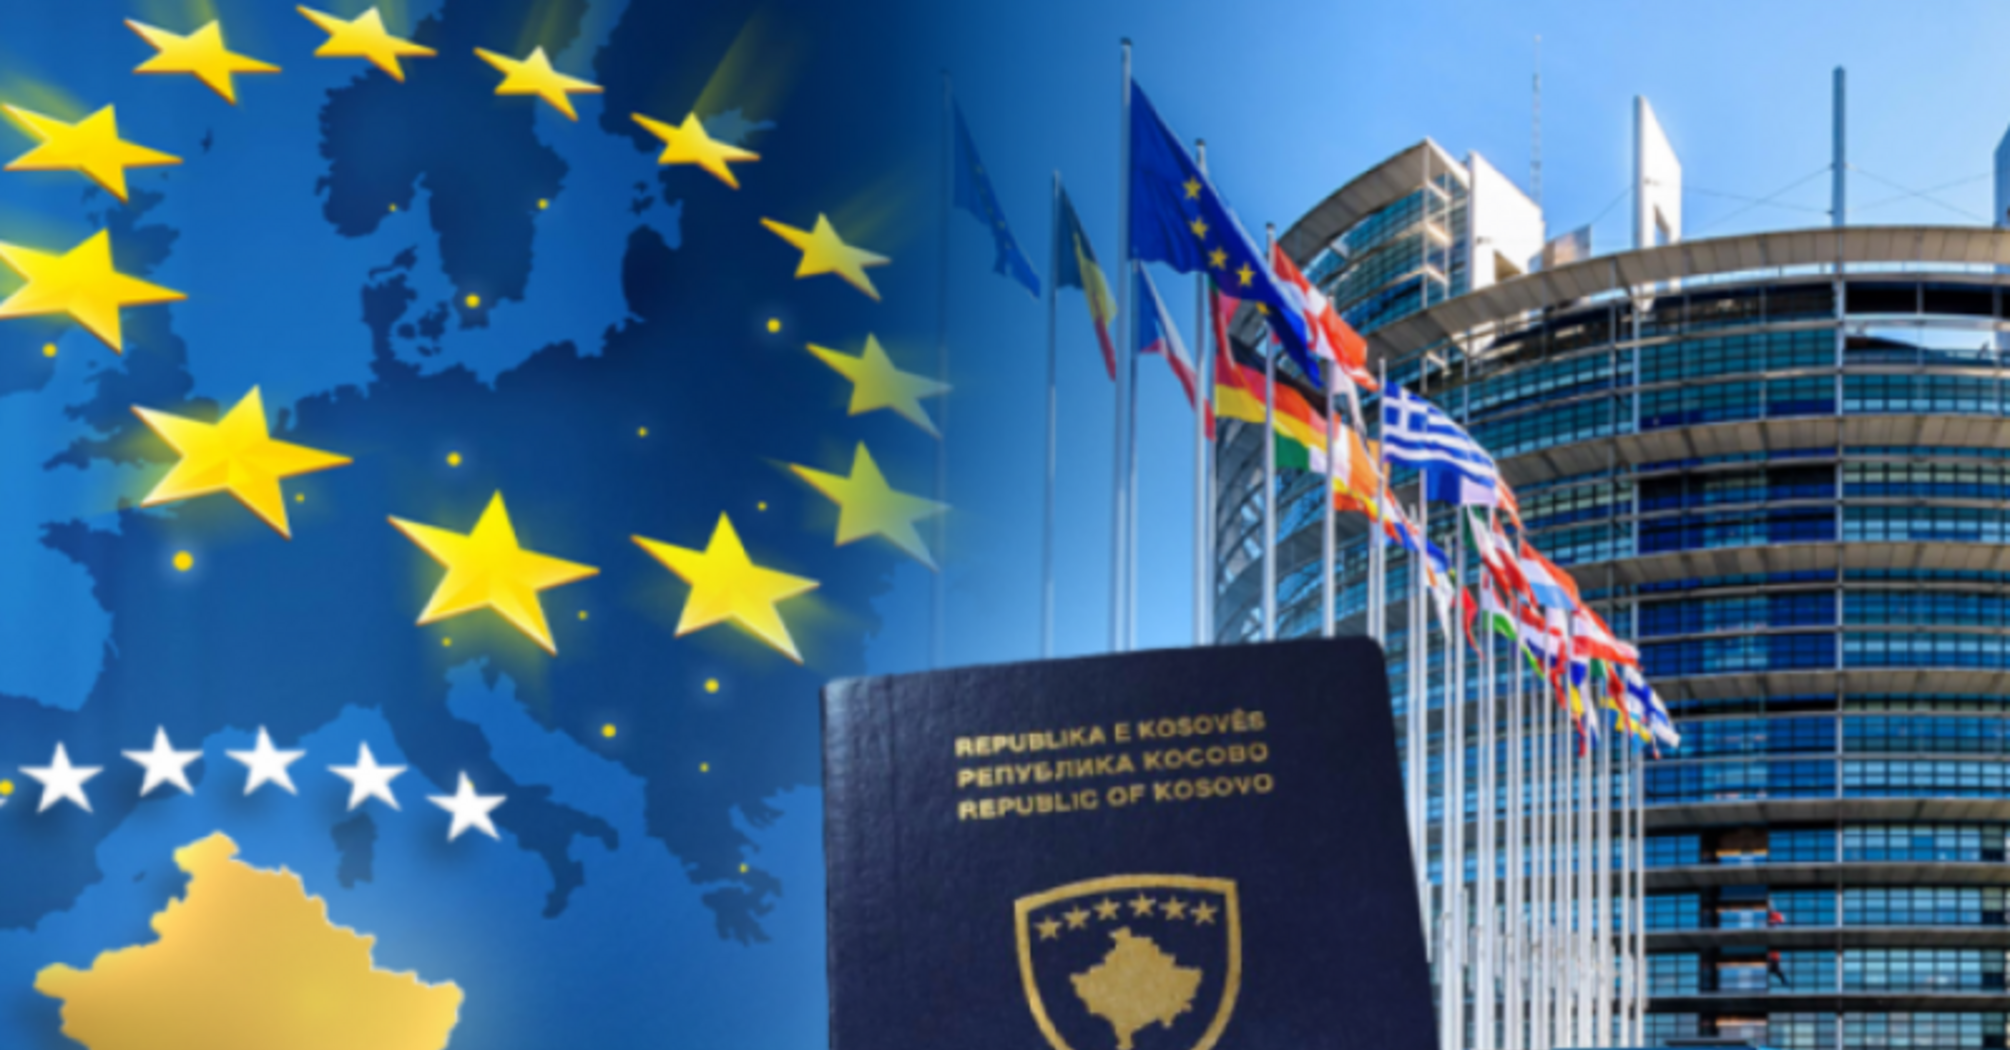 Kosovo citizens can travel to the EU without visas